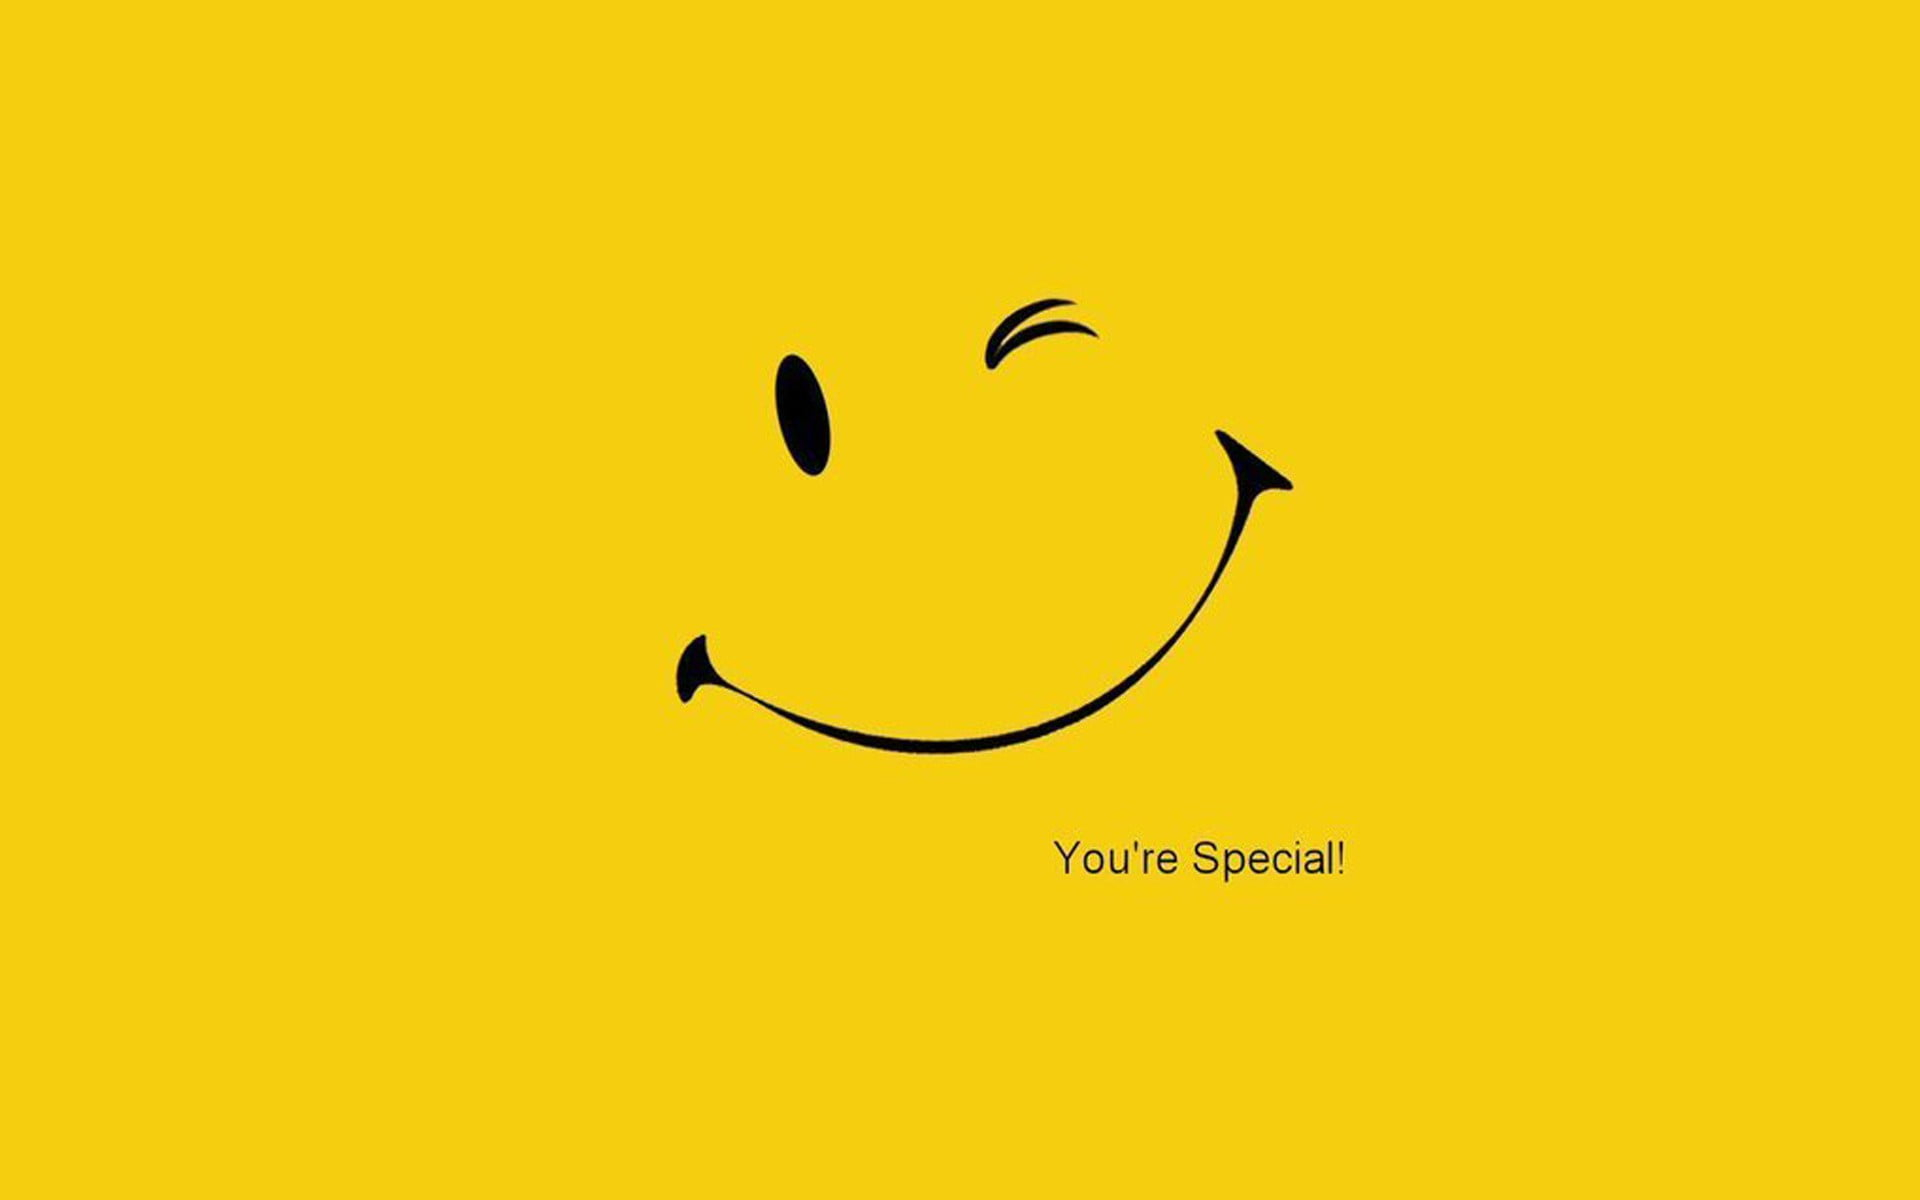 Emoji illustration wallpaper, motivational, minimalism, yellow, no people